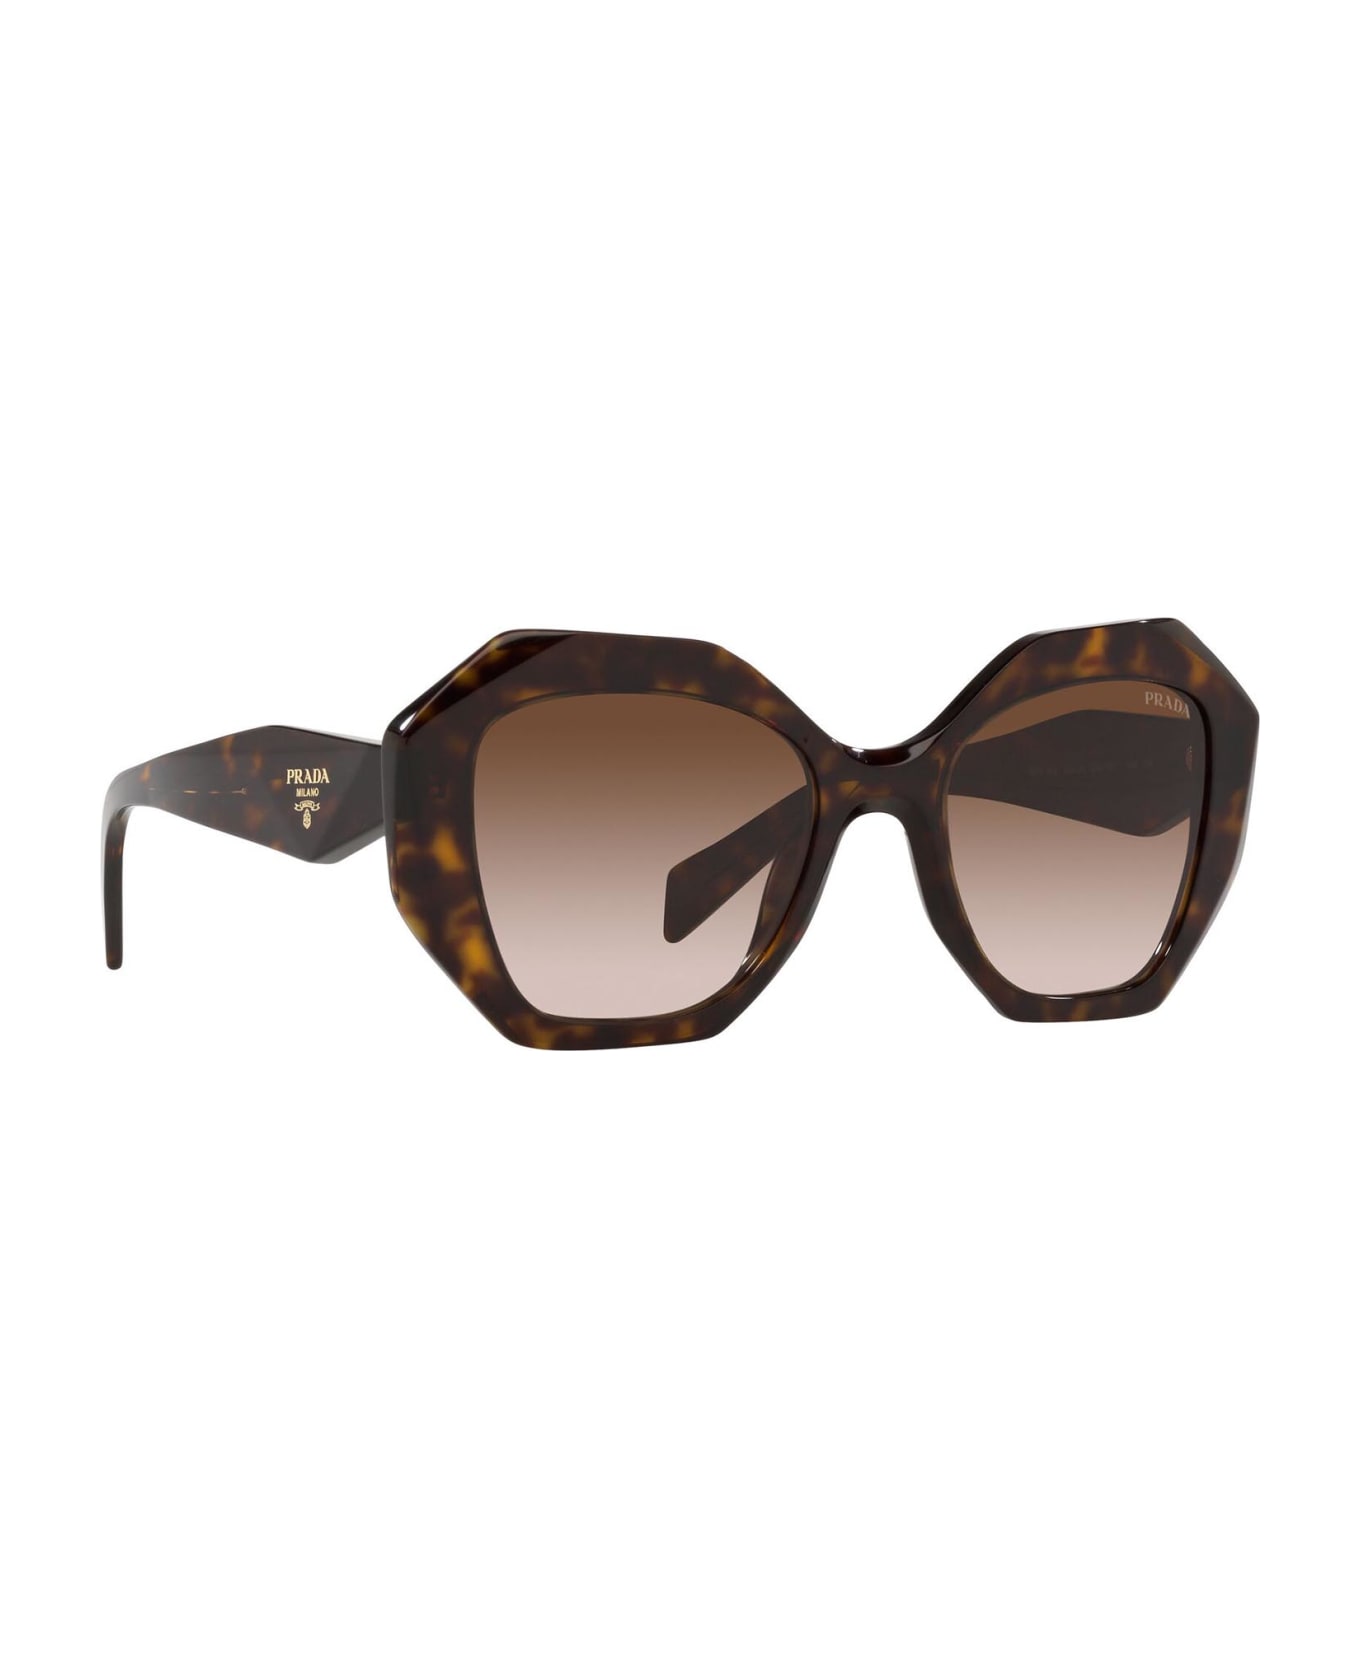 Prada Eyewear Pr 16ws Tortoise Sunglasses - Tortoise